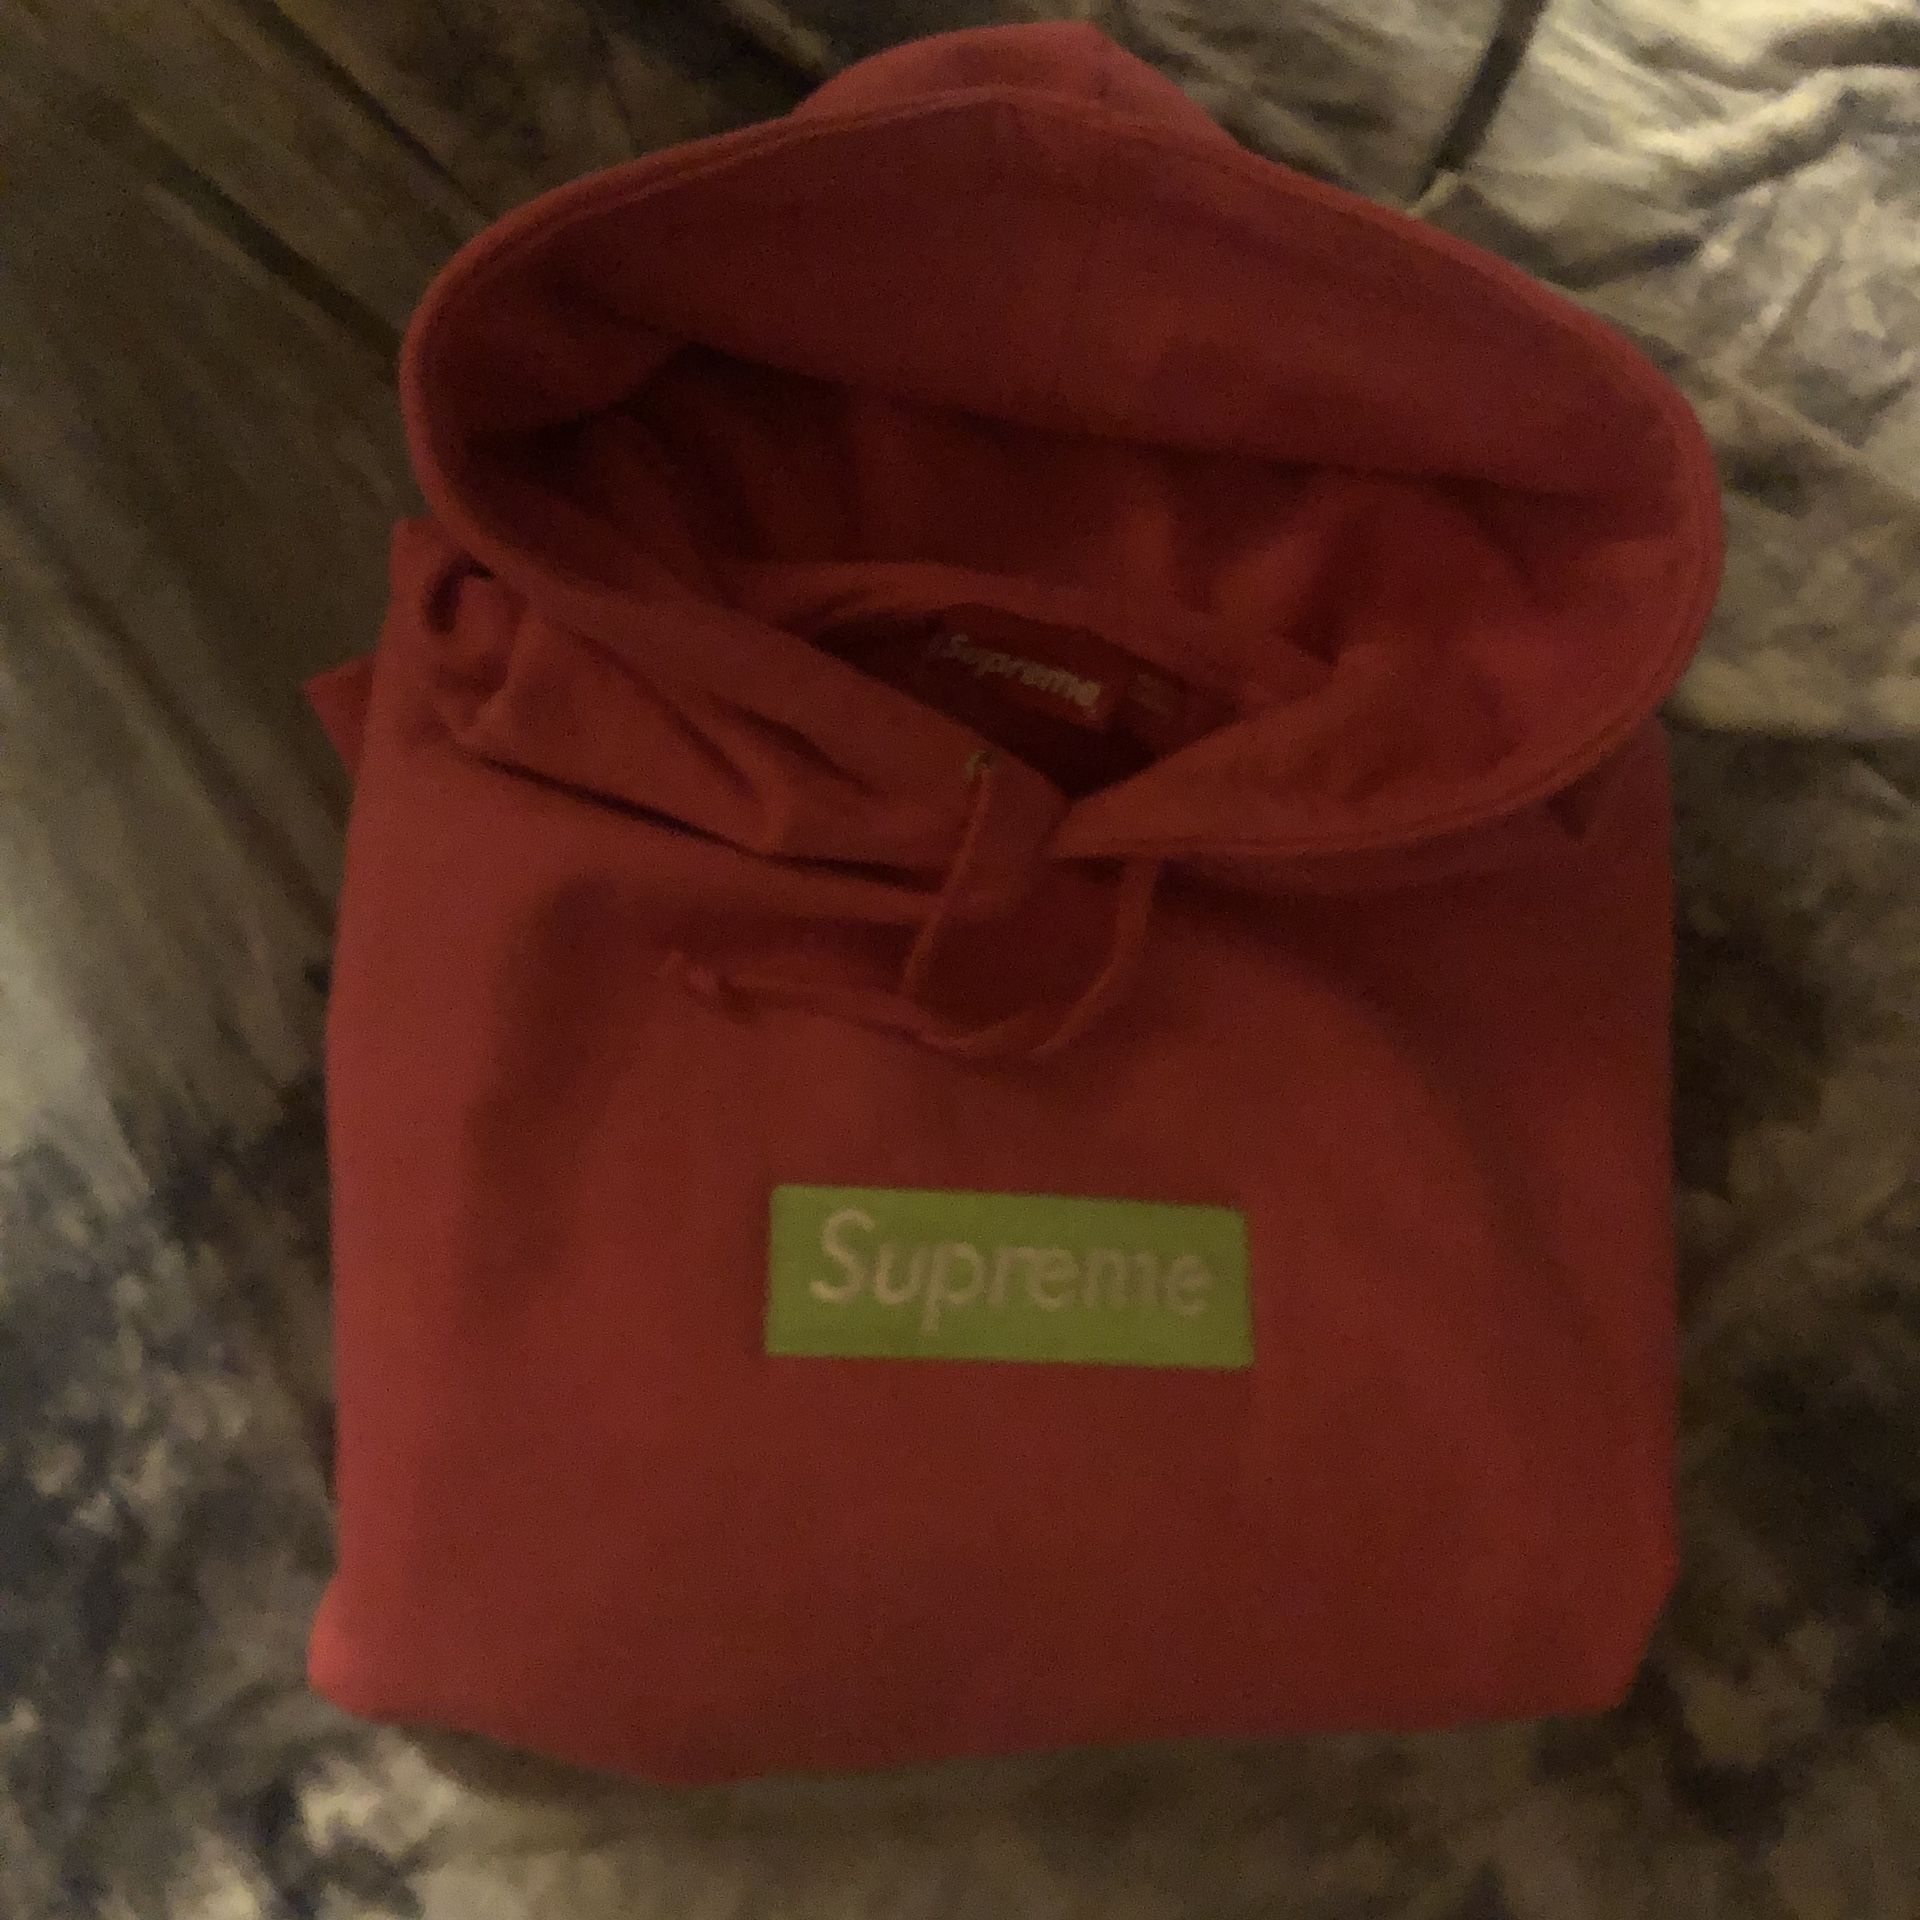 FW17 Magenta Supreme Box Logo Hoodie, Size XL with receipt